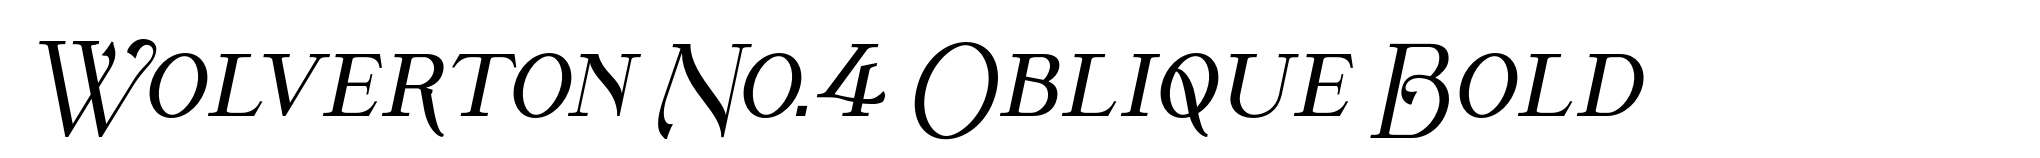 Wolverton No.4 Oblique Bold image